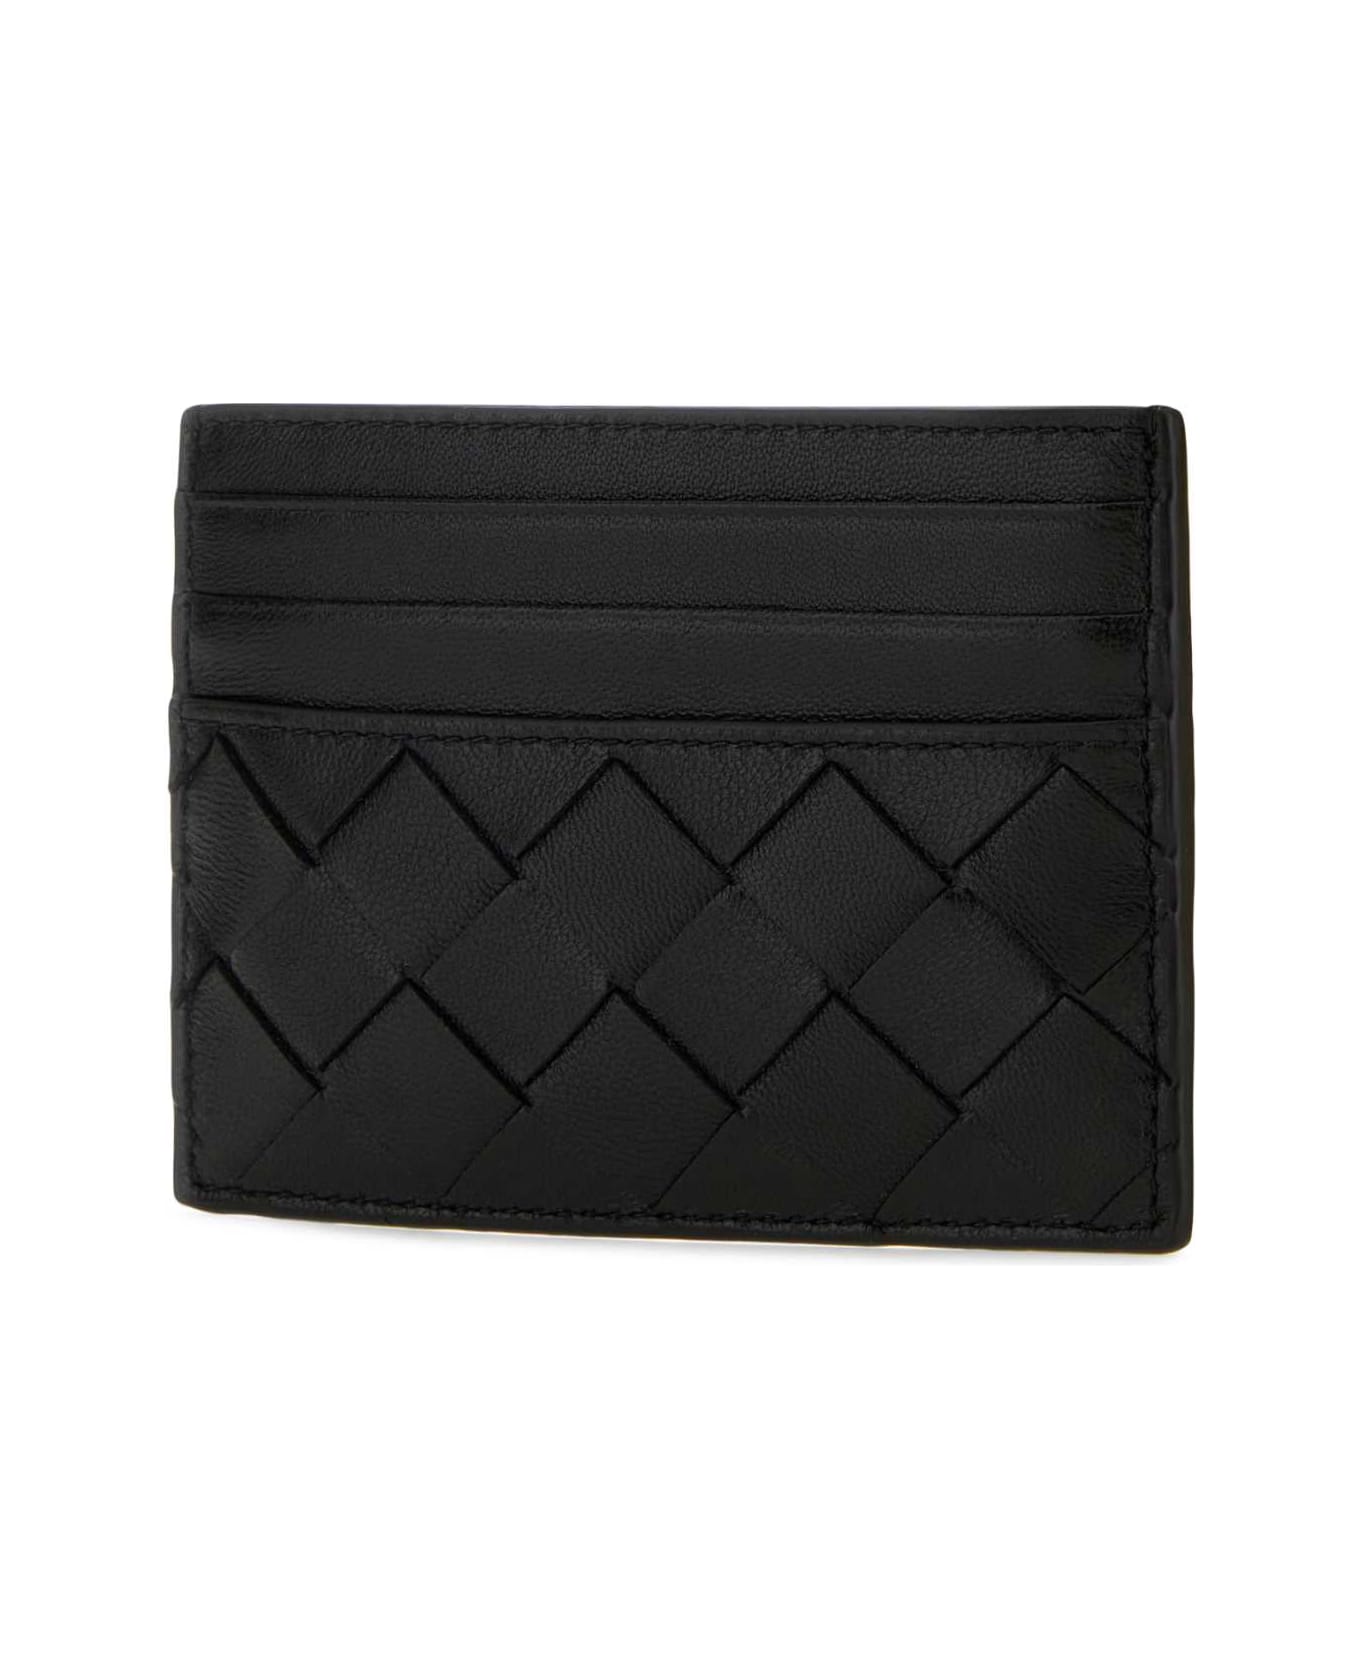 Bottega Veneta Black Leather Card Holder - BLACKGOLD 財布